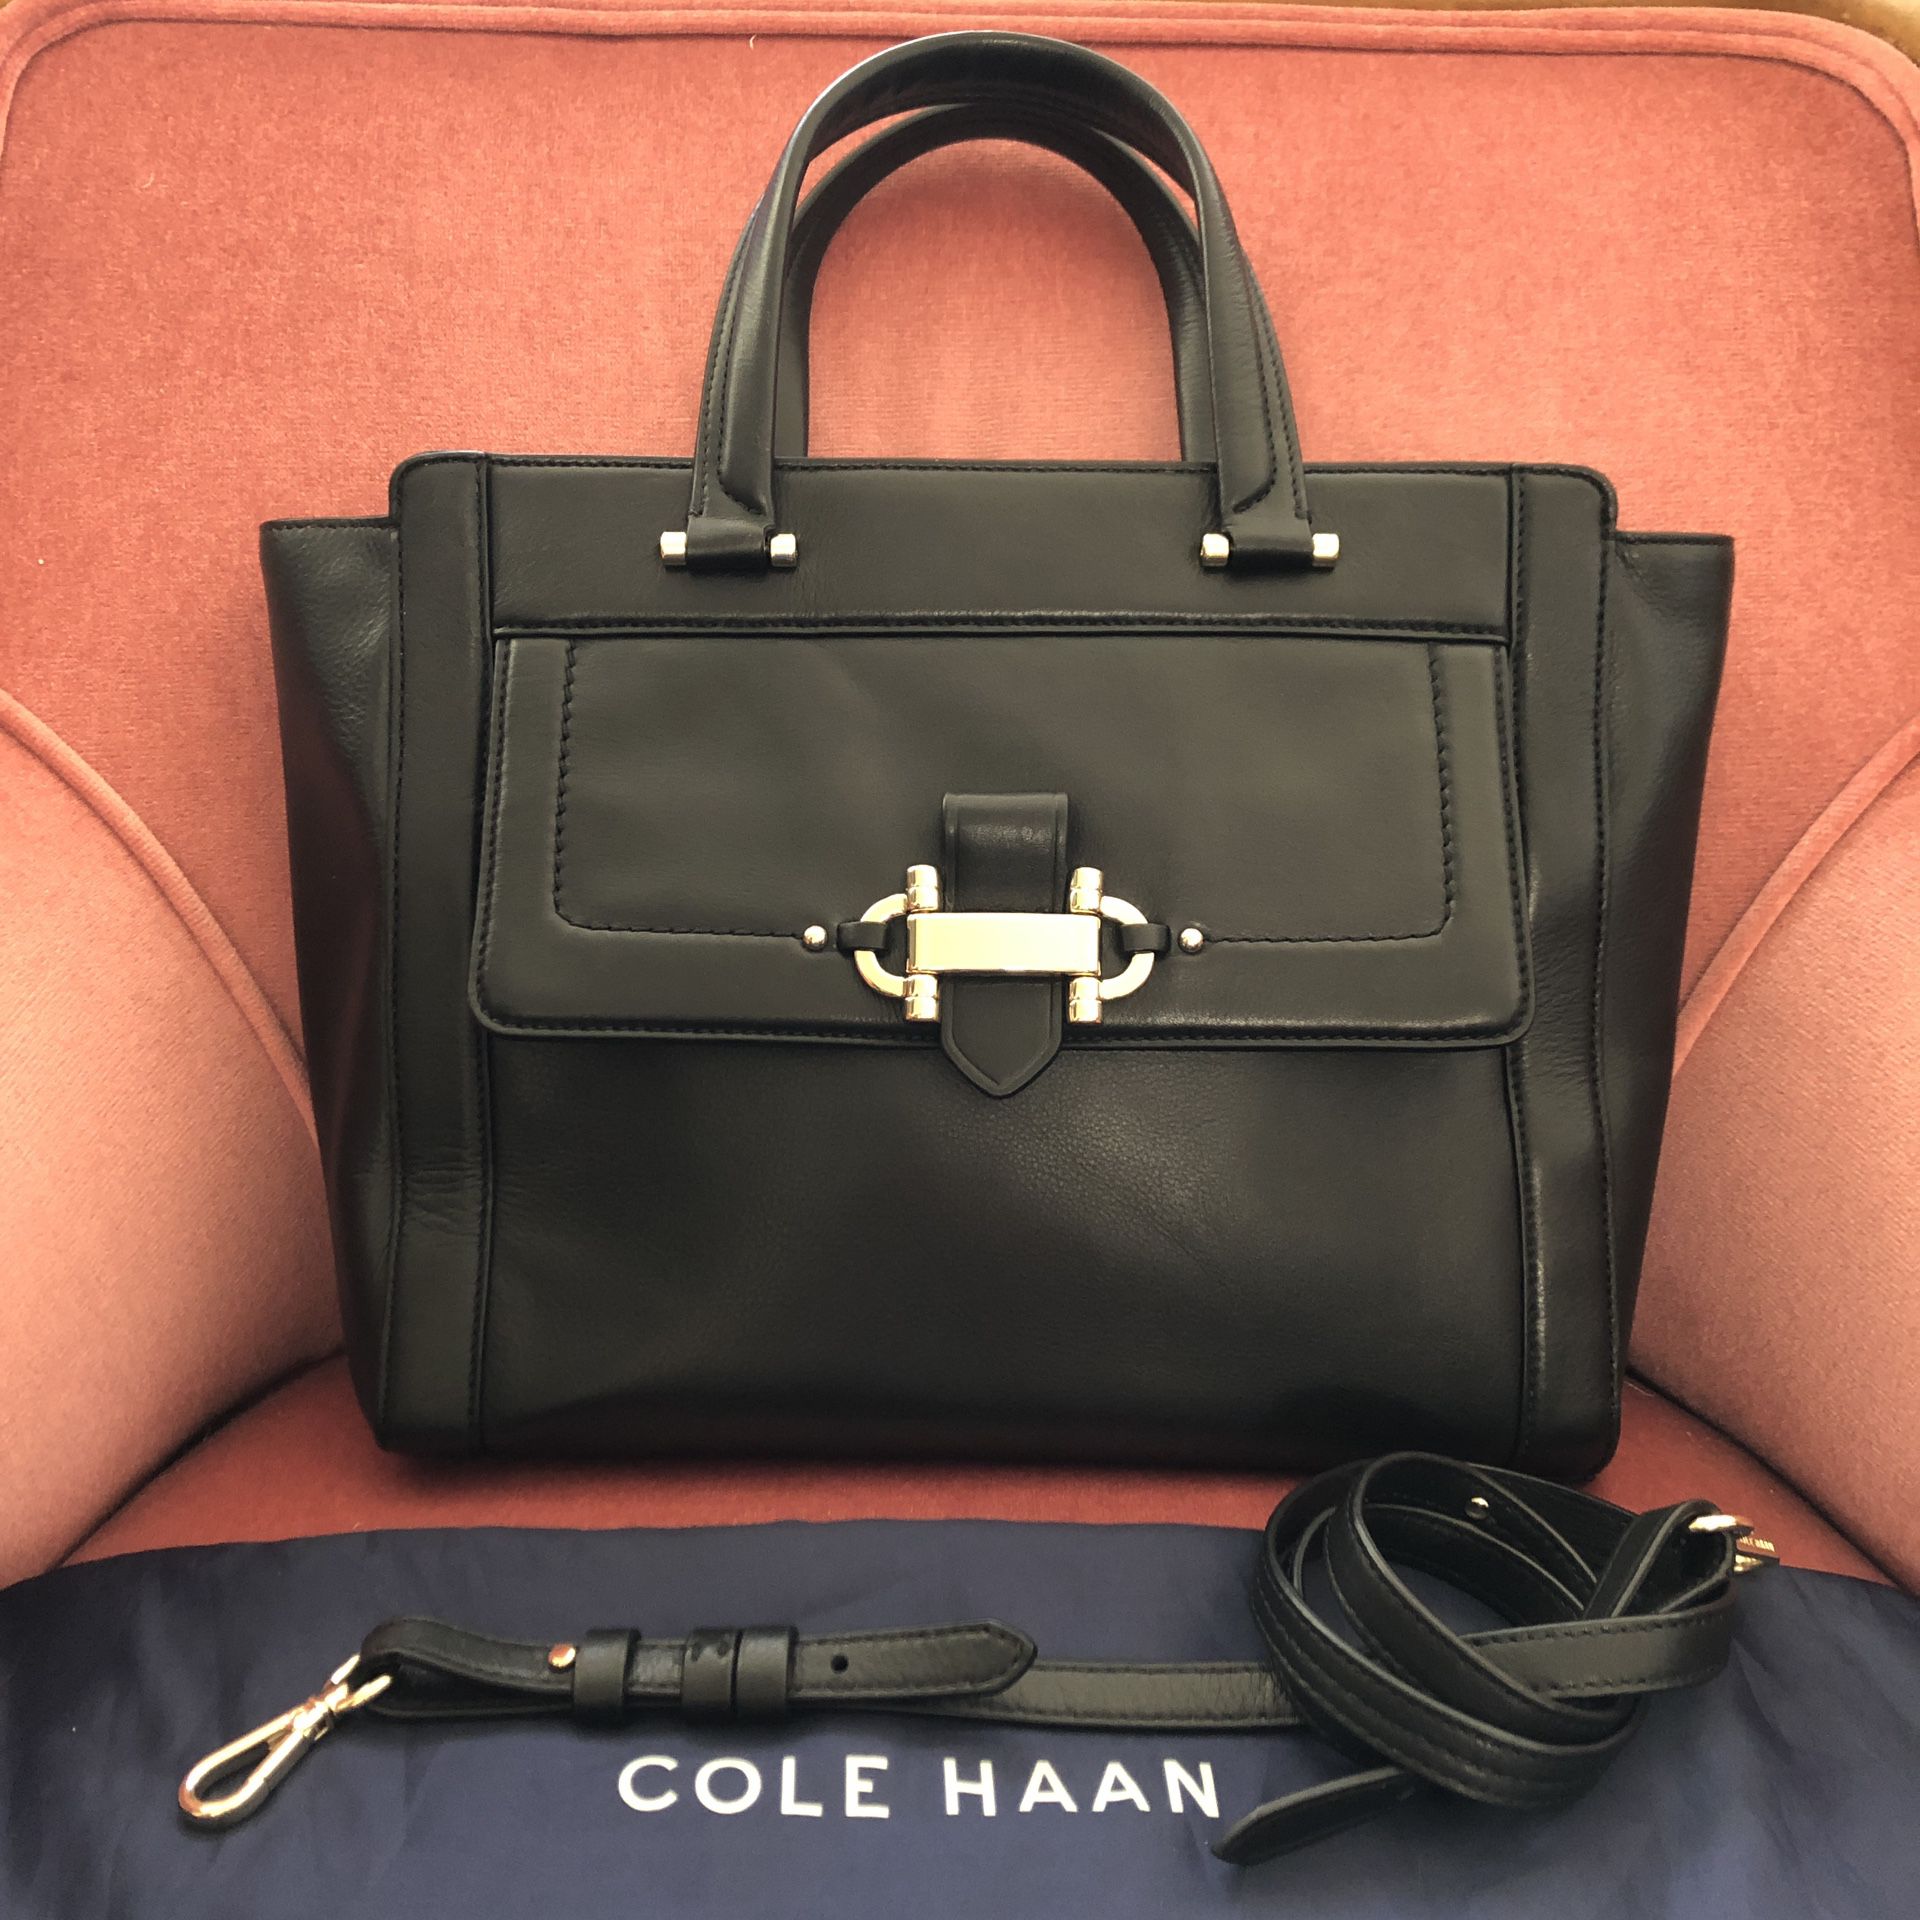 Cole Haan Women’s Black Leather Handbag Crossbody Shoulder Bag Attache Professional Office Work